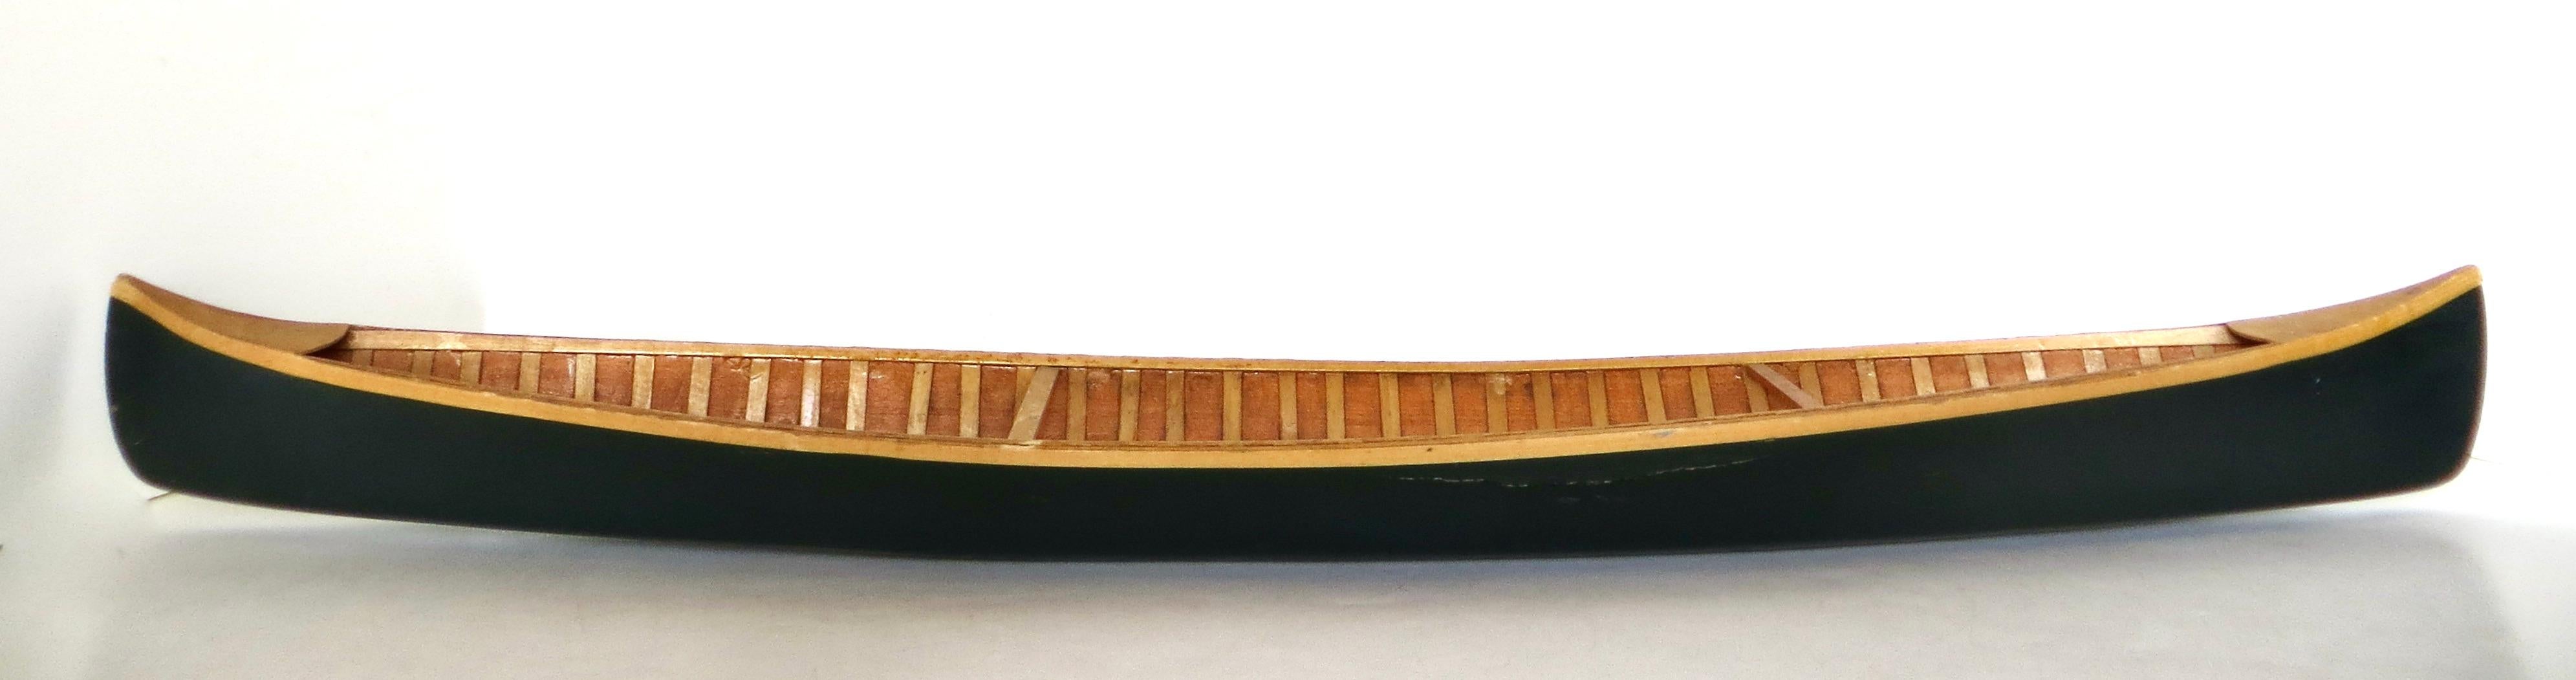 Miniature Model Wooden Canoe, American Circa 1950's 2